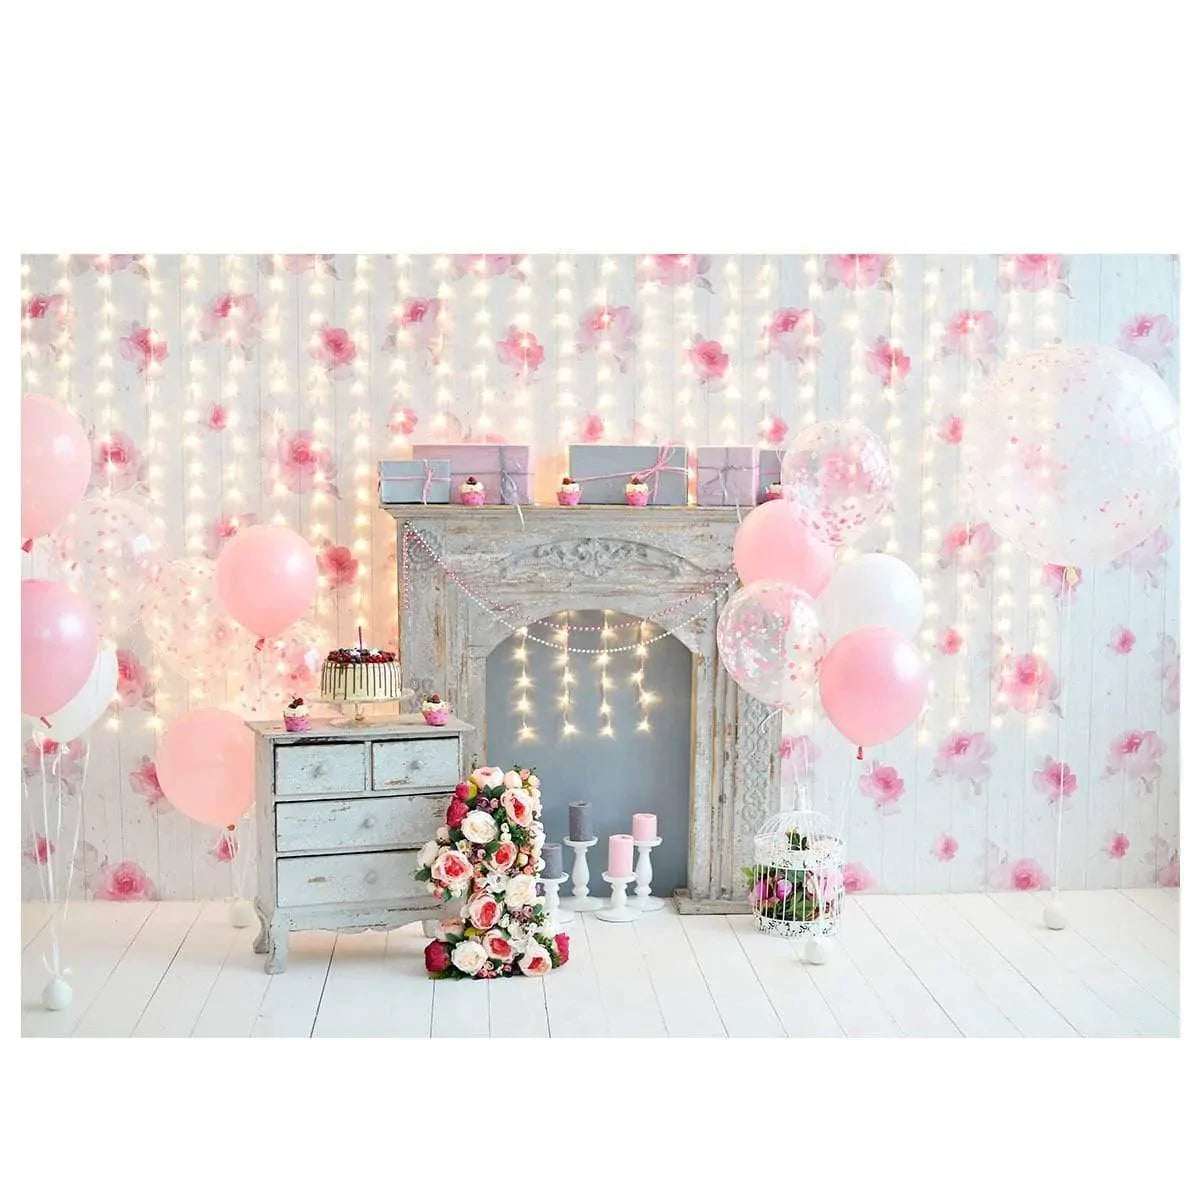 Allenjoy Fireplace Pink Balloons Floral Boken Backdrop - Allenjoystudio